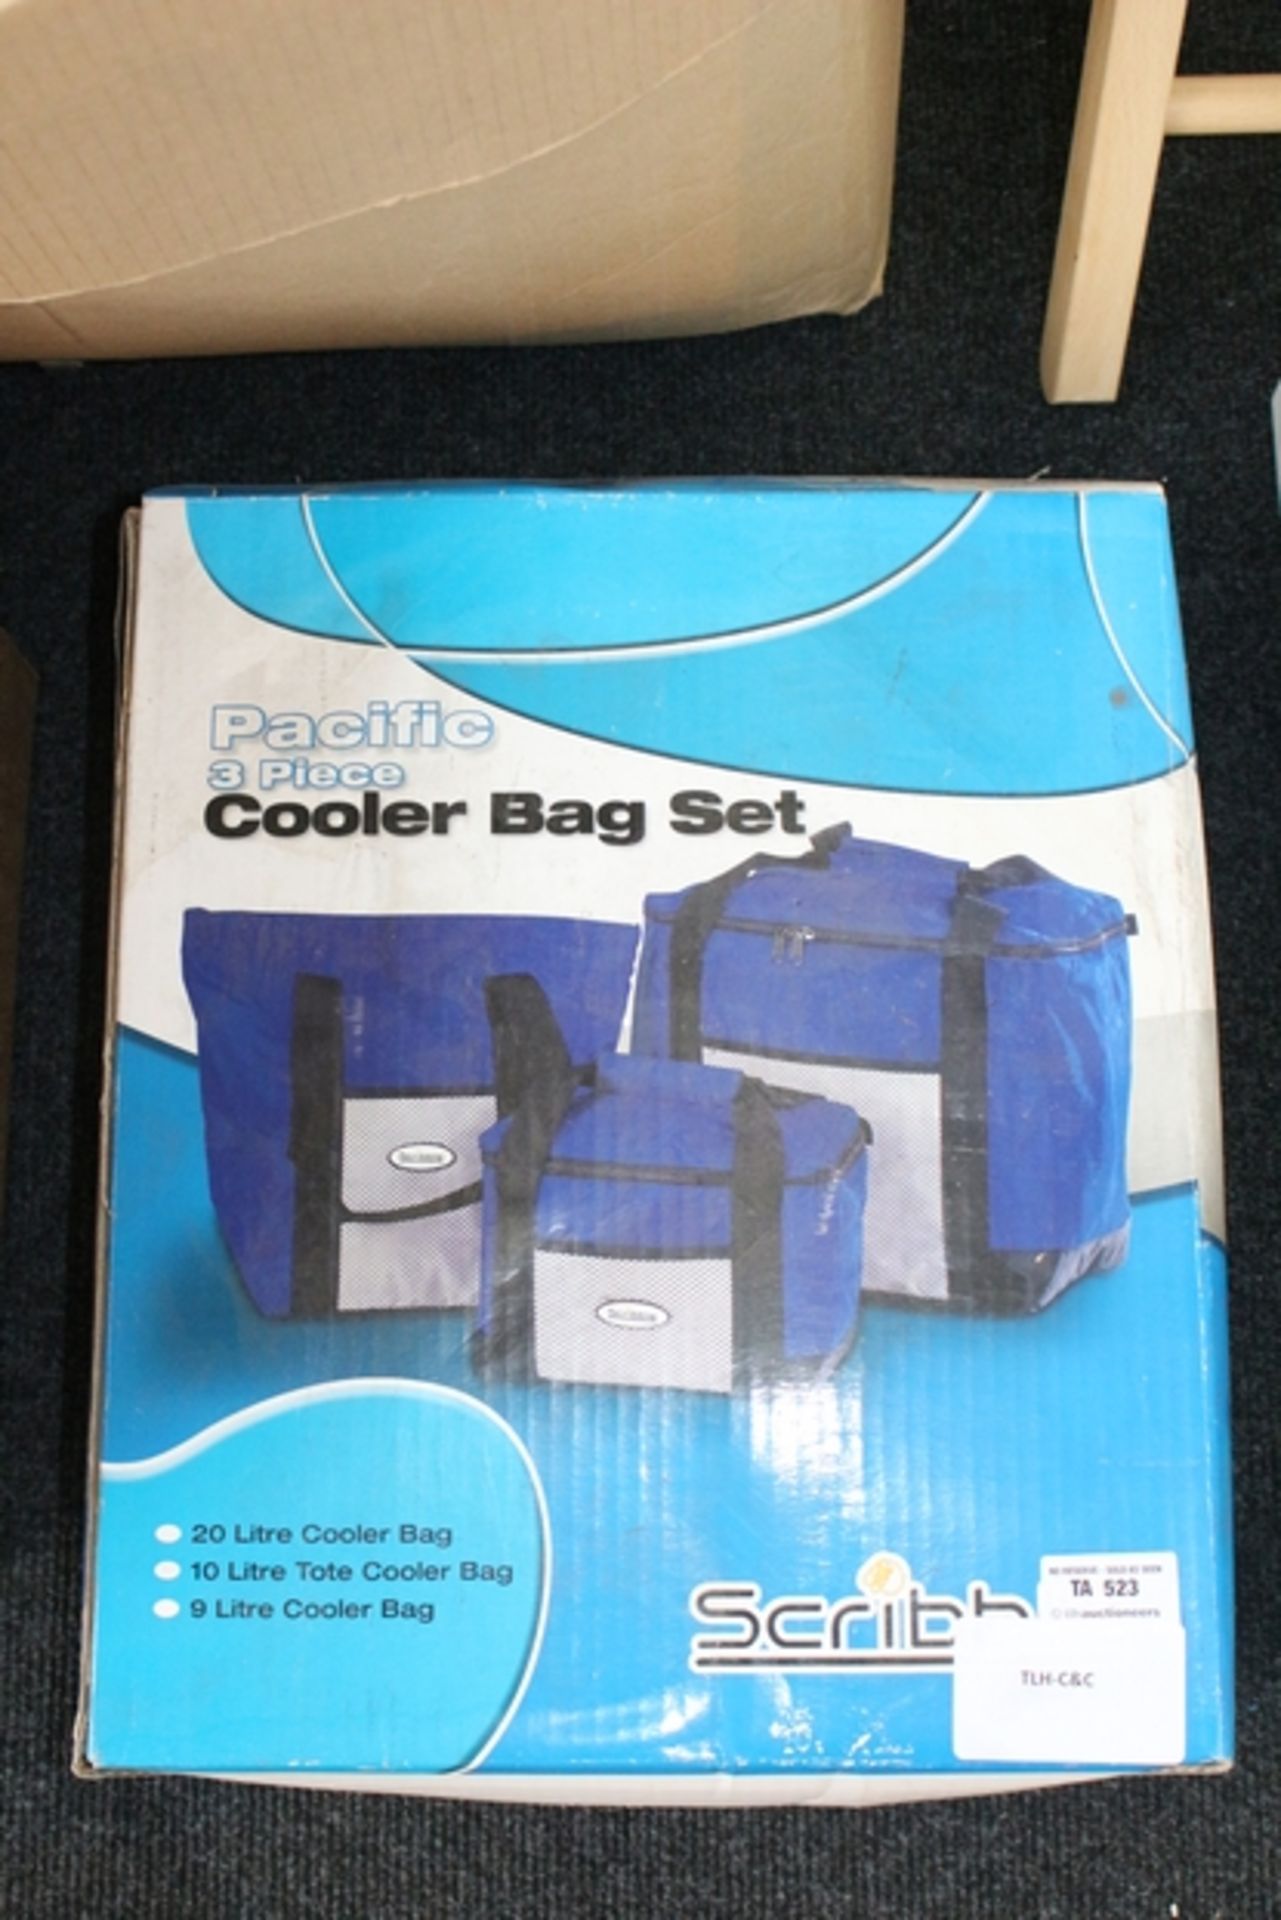 1X BOXED PACIFIC 3 PIECE COOLER BAG (TLH-C&C)